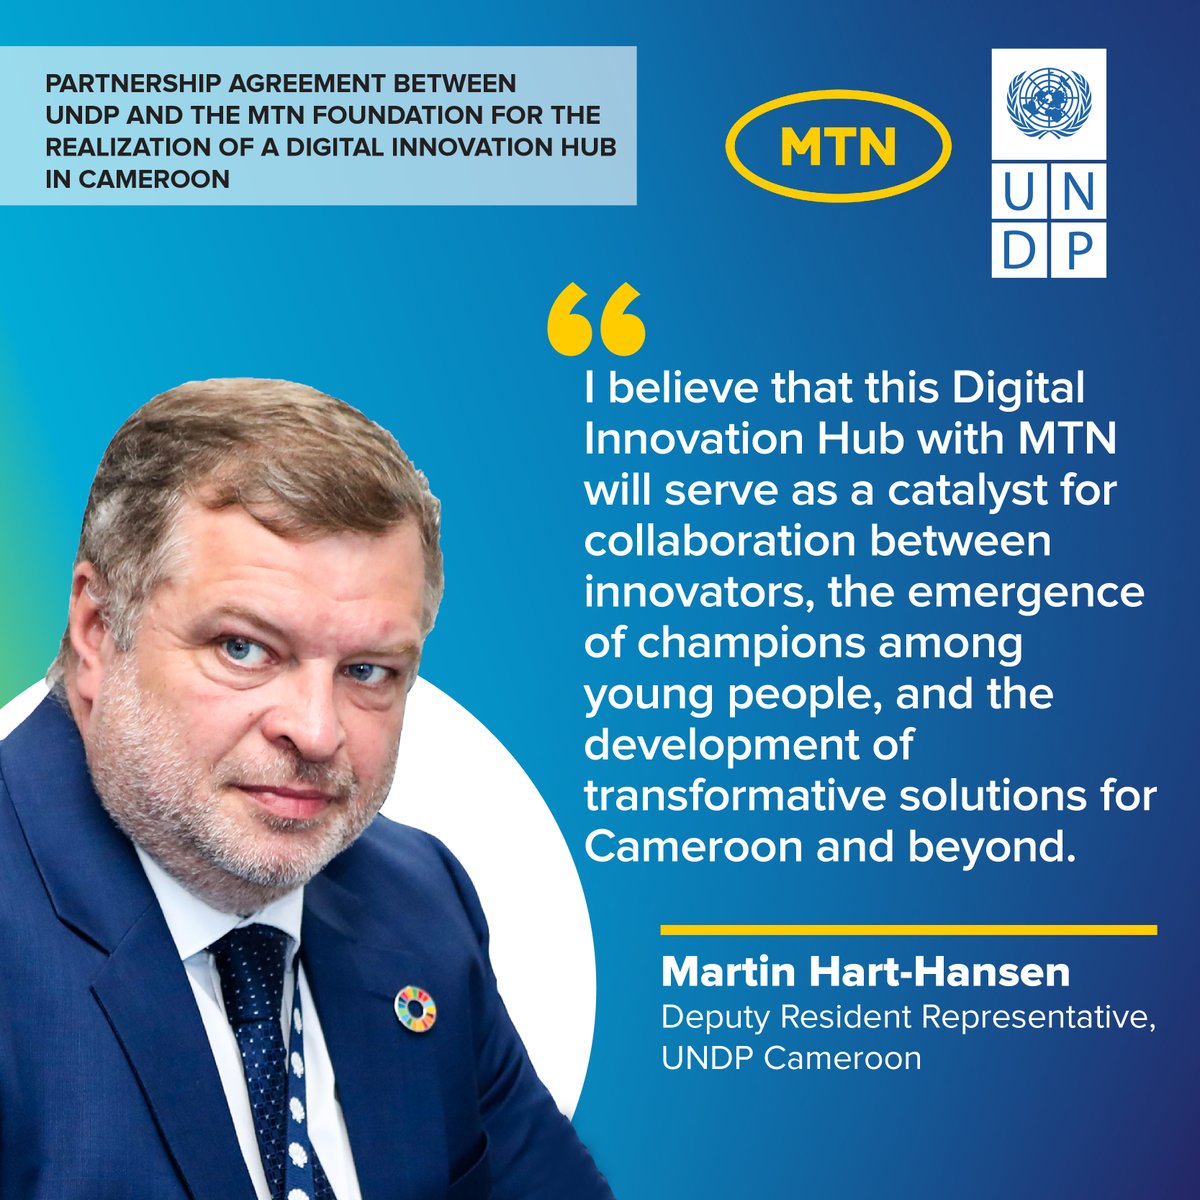 For @mharthansen, @PNUDCameroun Deputy Resident Representative, the Digital Innovation Hub w/ .@MTNFoundation will ignite fruitful collaboration among innovators and foster the emergence of champions among young people. #DoingGoodTogether #SDG9 #SDG17